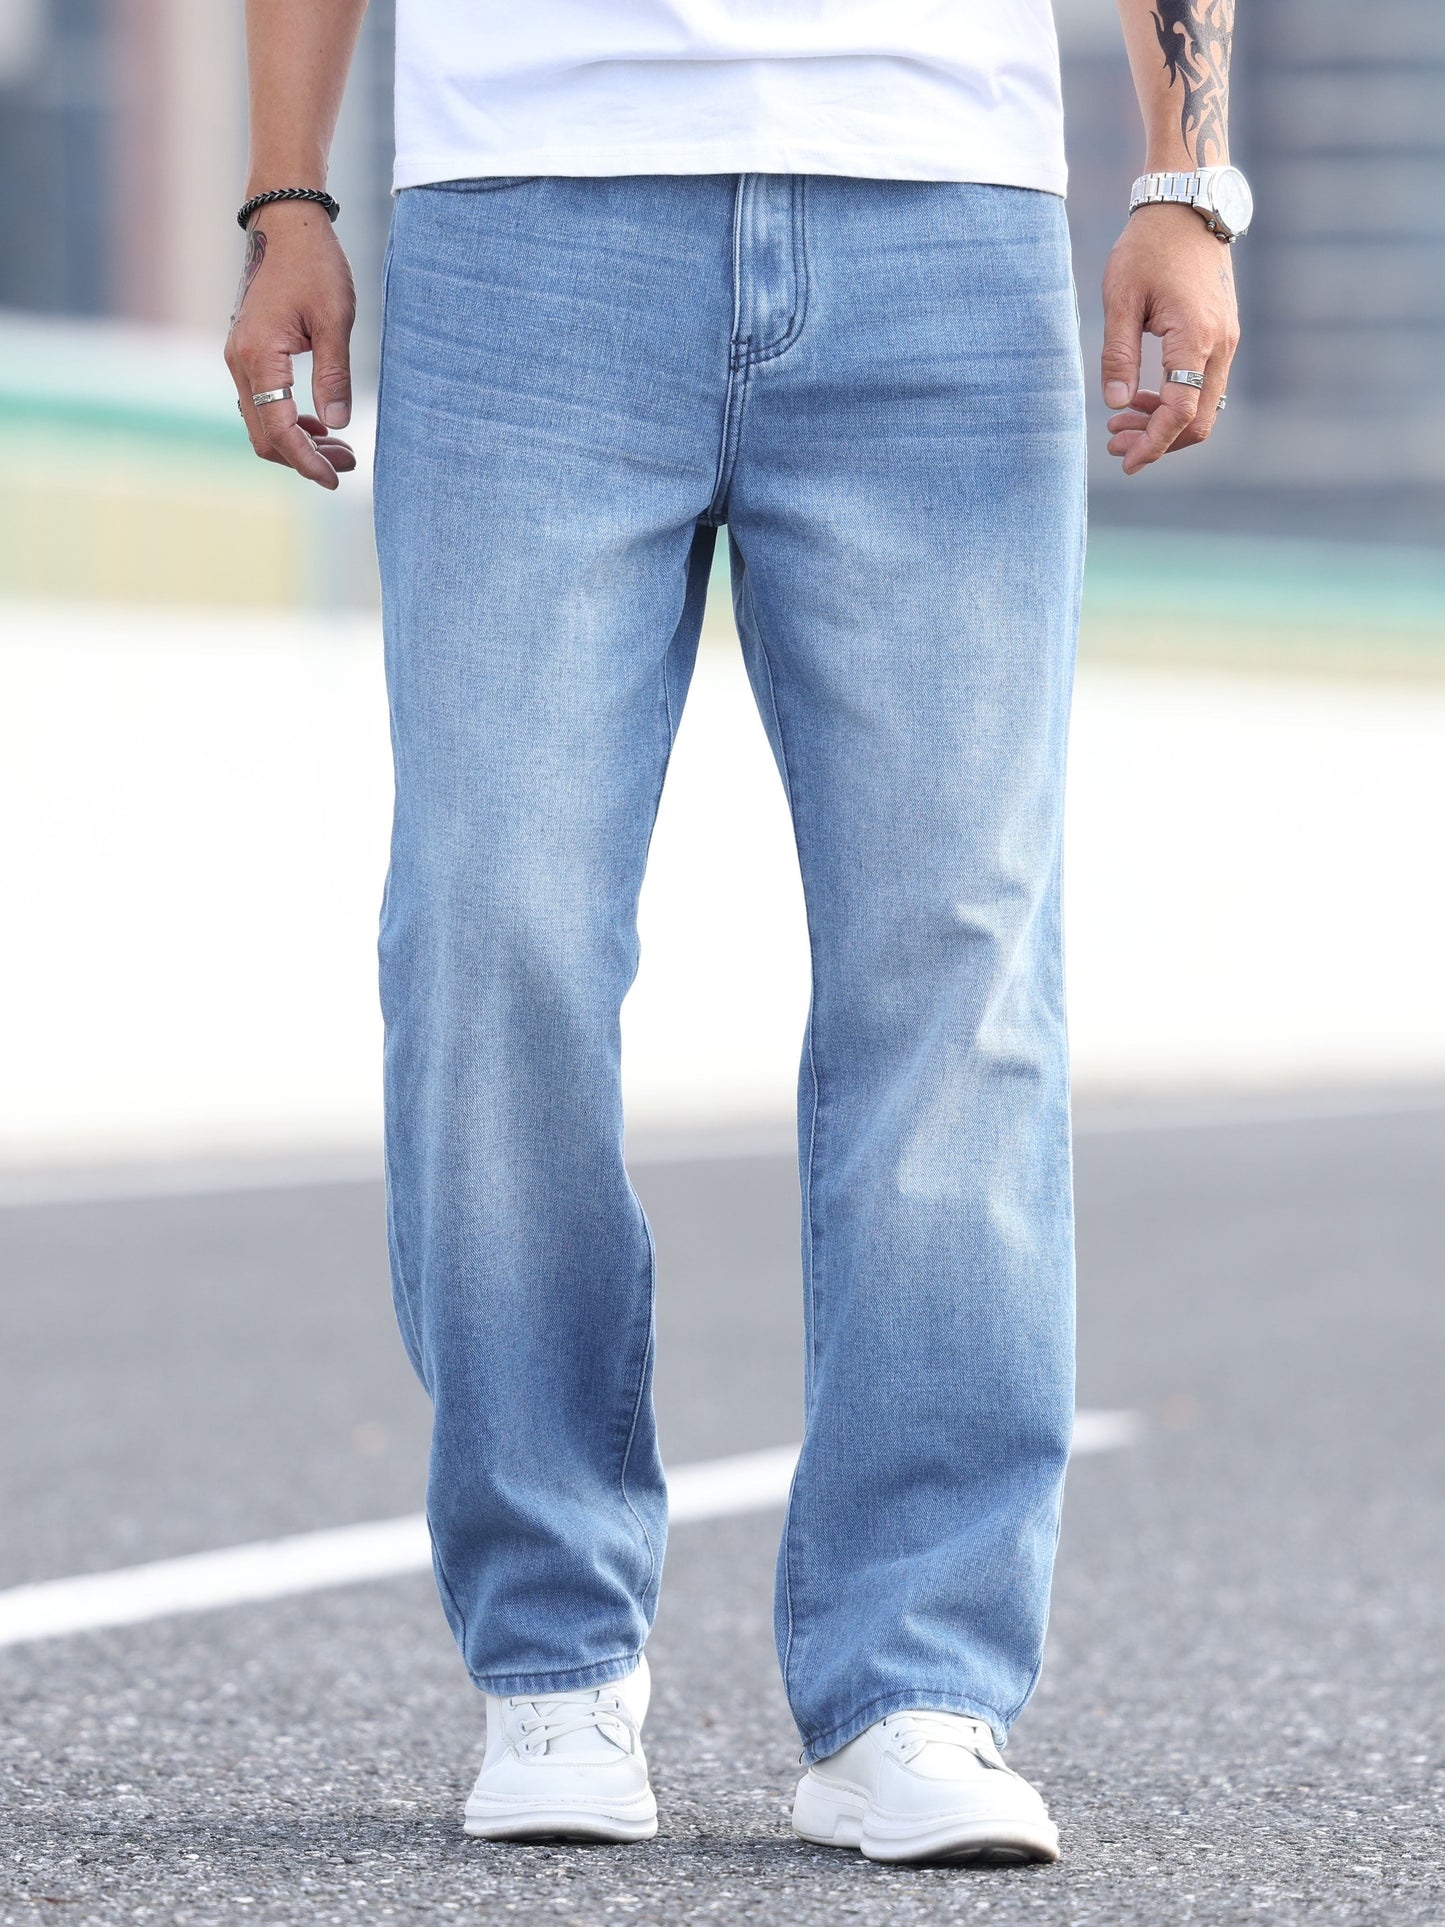 Classic Design Cotton Blend Distressed Jeans, Men's Casual Drawstring Regular Fit Denim Pants For All Seasons